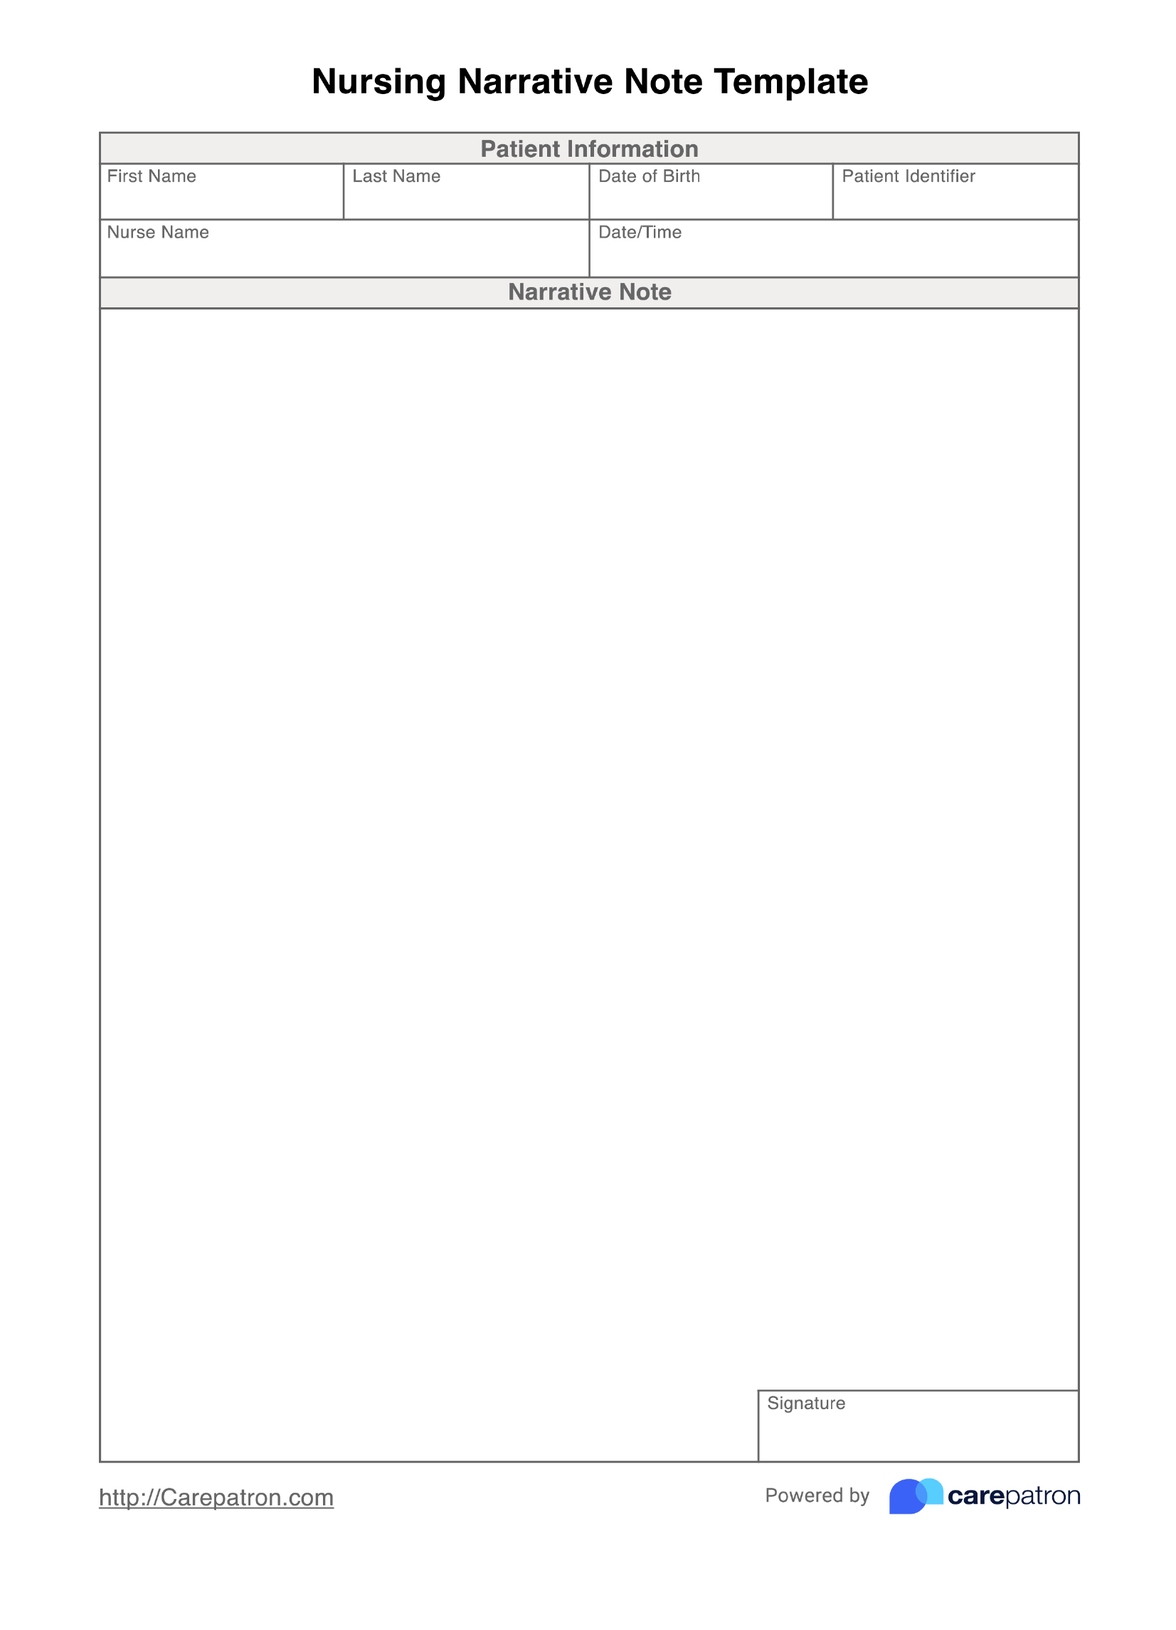 Nursing Narrative Note Template PDF Example